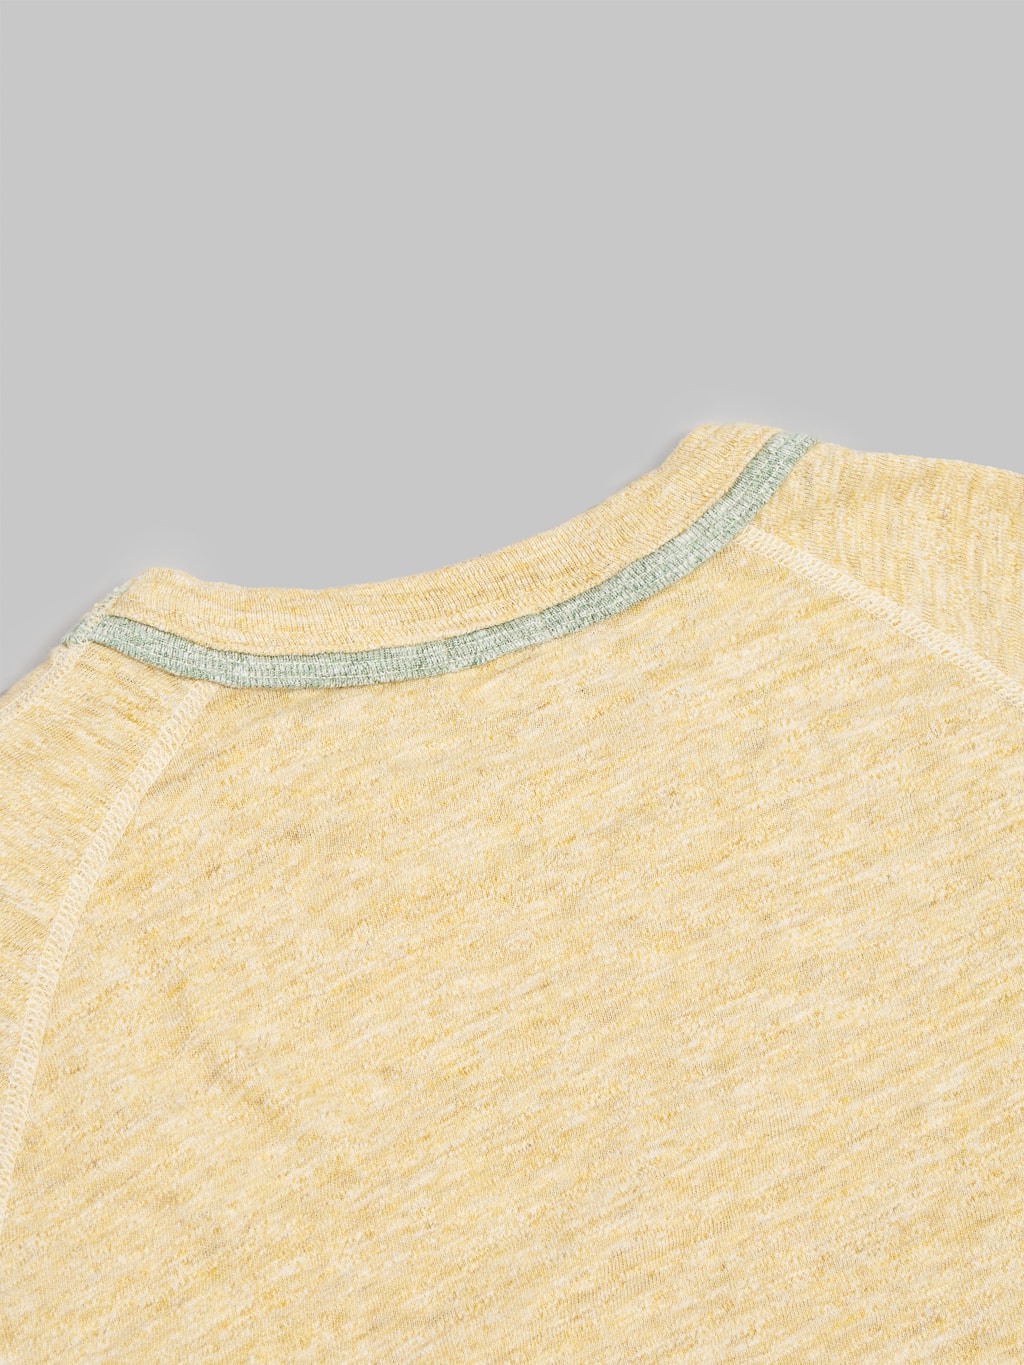 loop and weft double binder neck heather slub knit tshirt mustard stitching